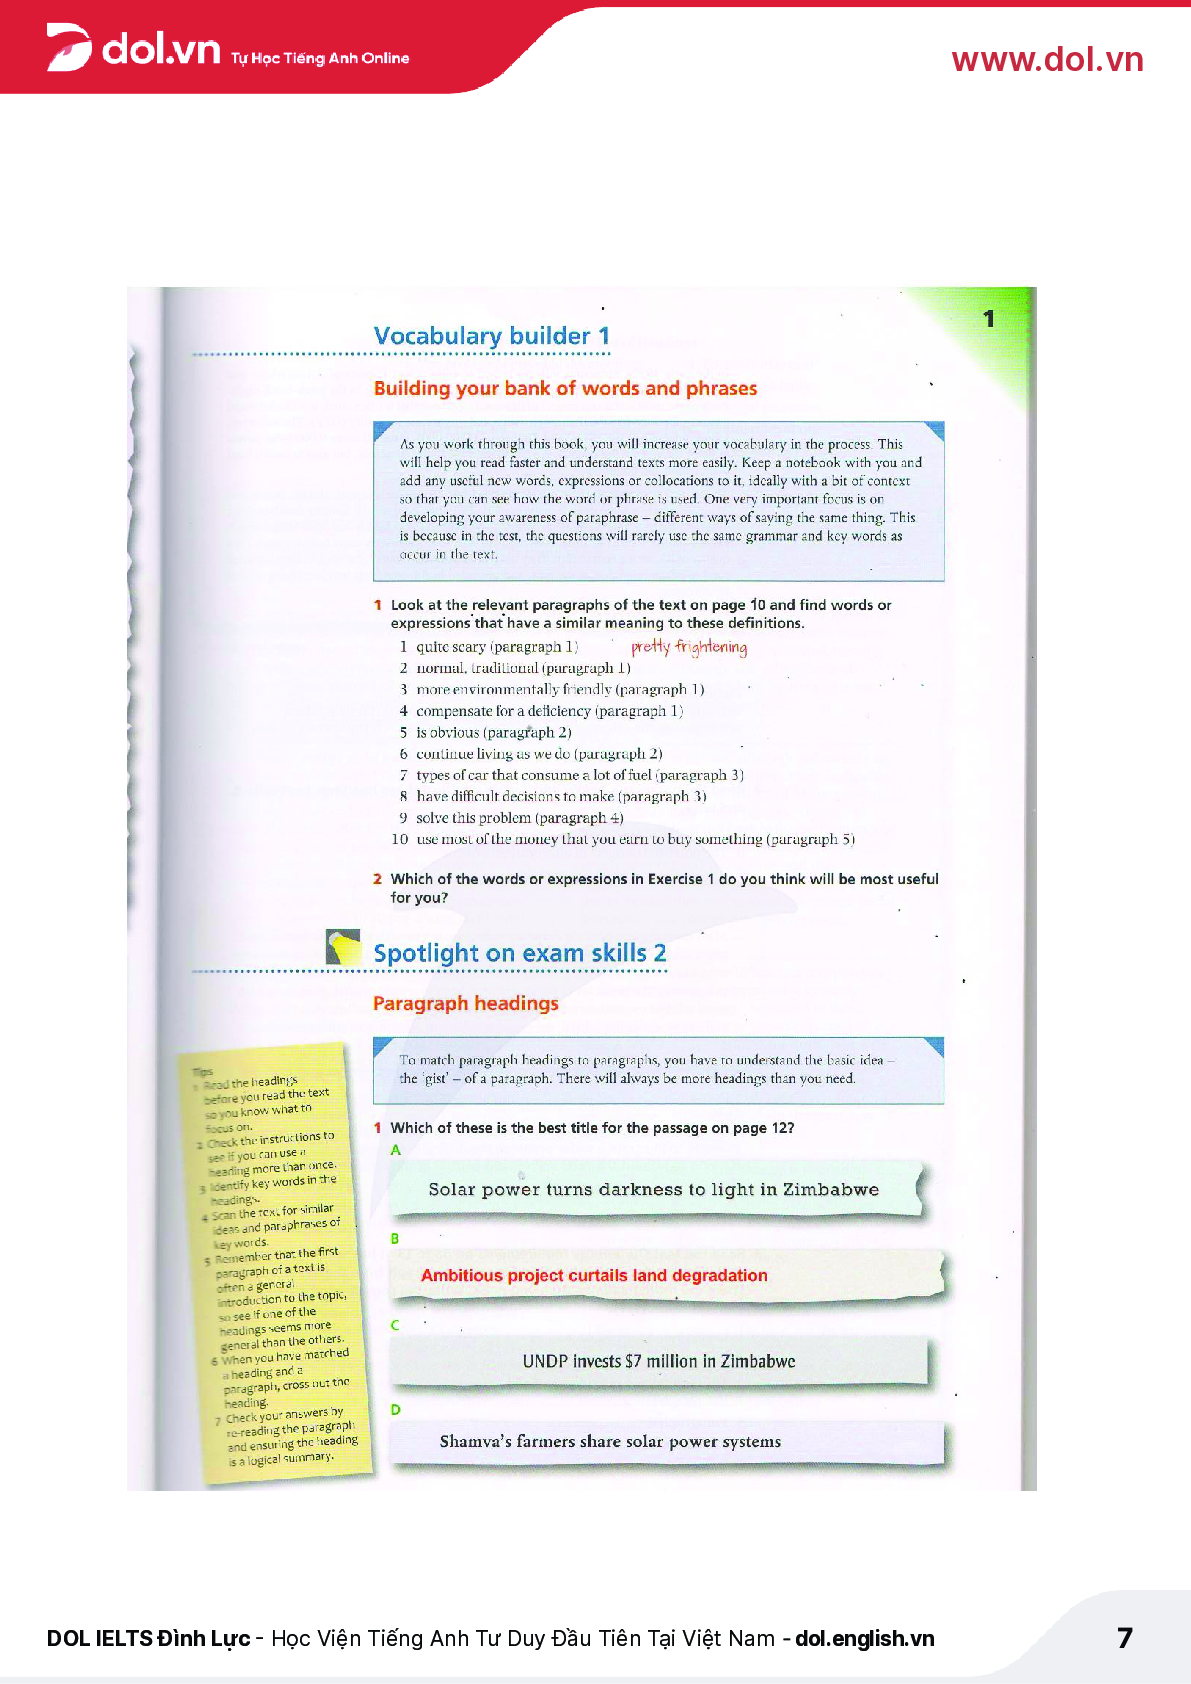 Sách IELTS Advantage Reading Skills pdf | Xem online, tải PDF miễn phí (trang 7)